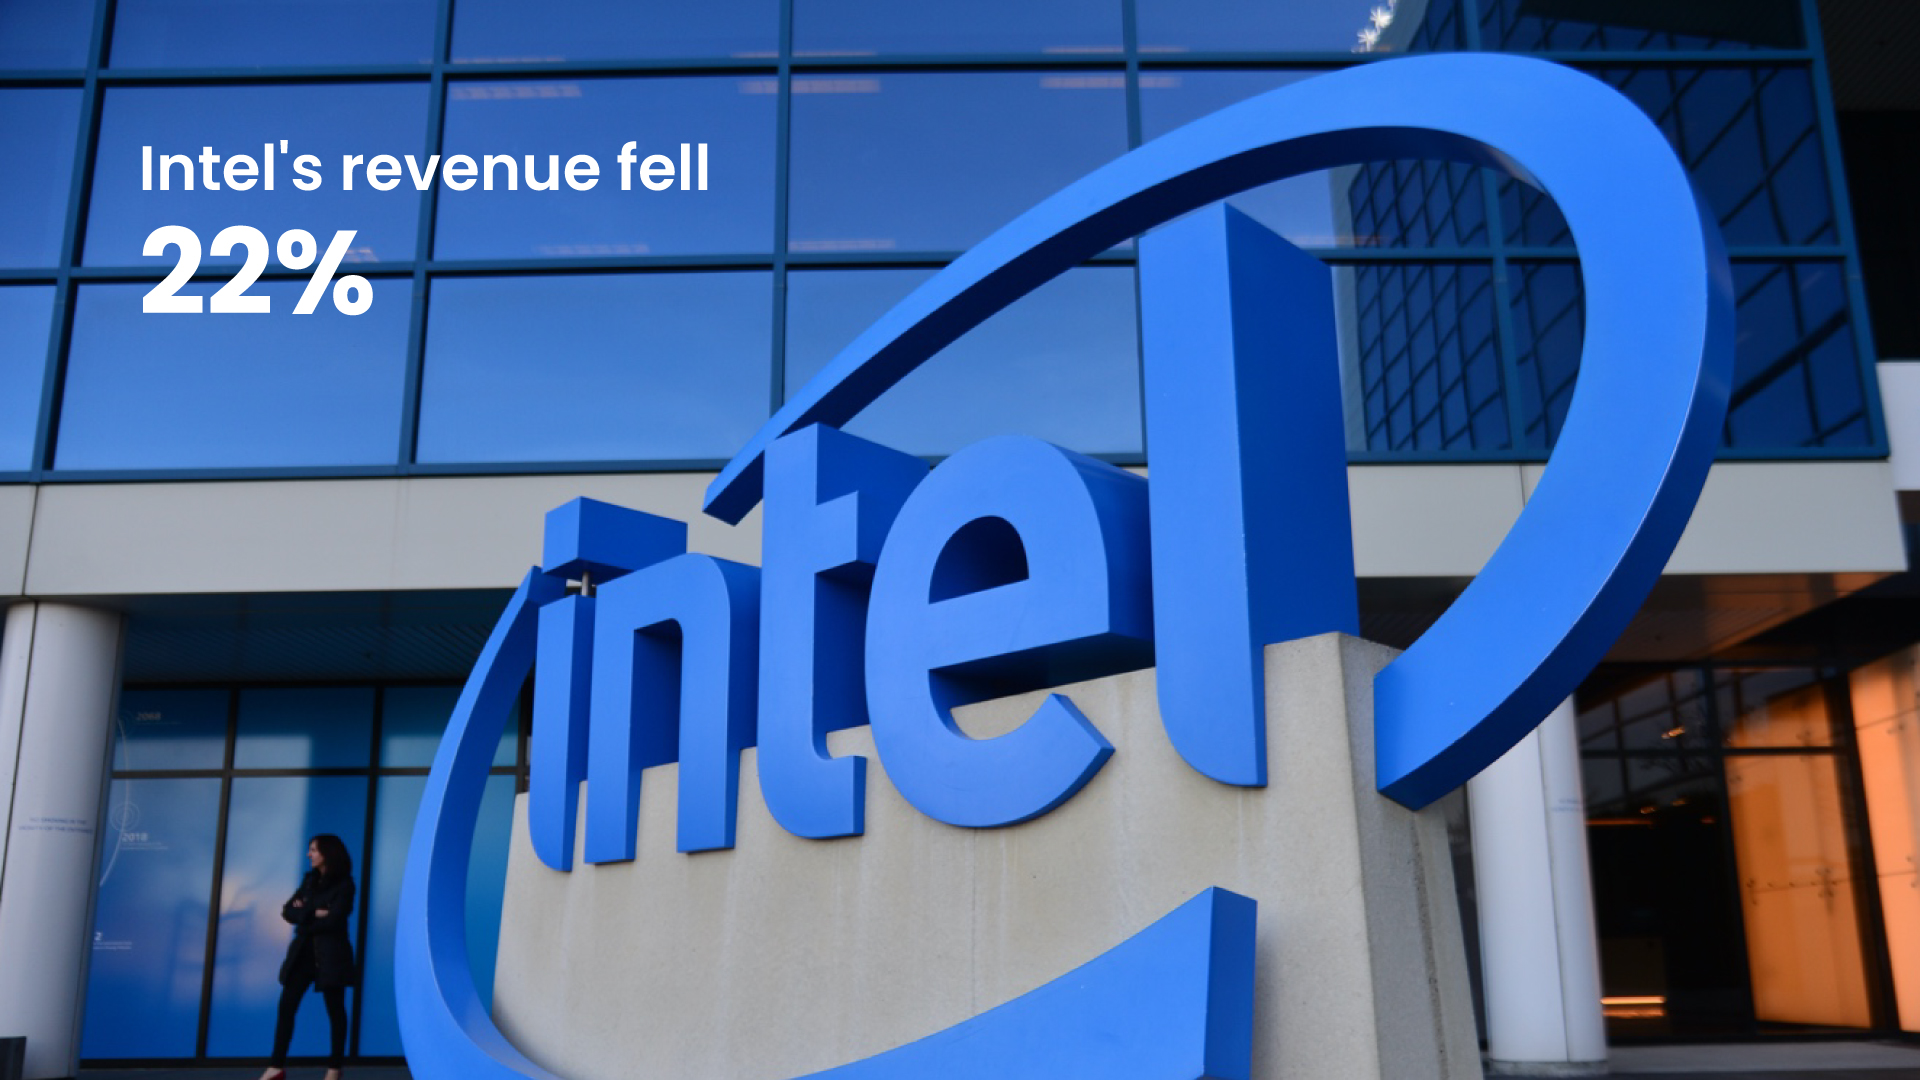 Intel's revenue fell 22% in the second quarter